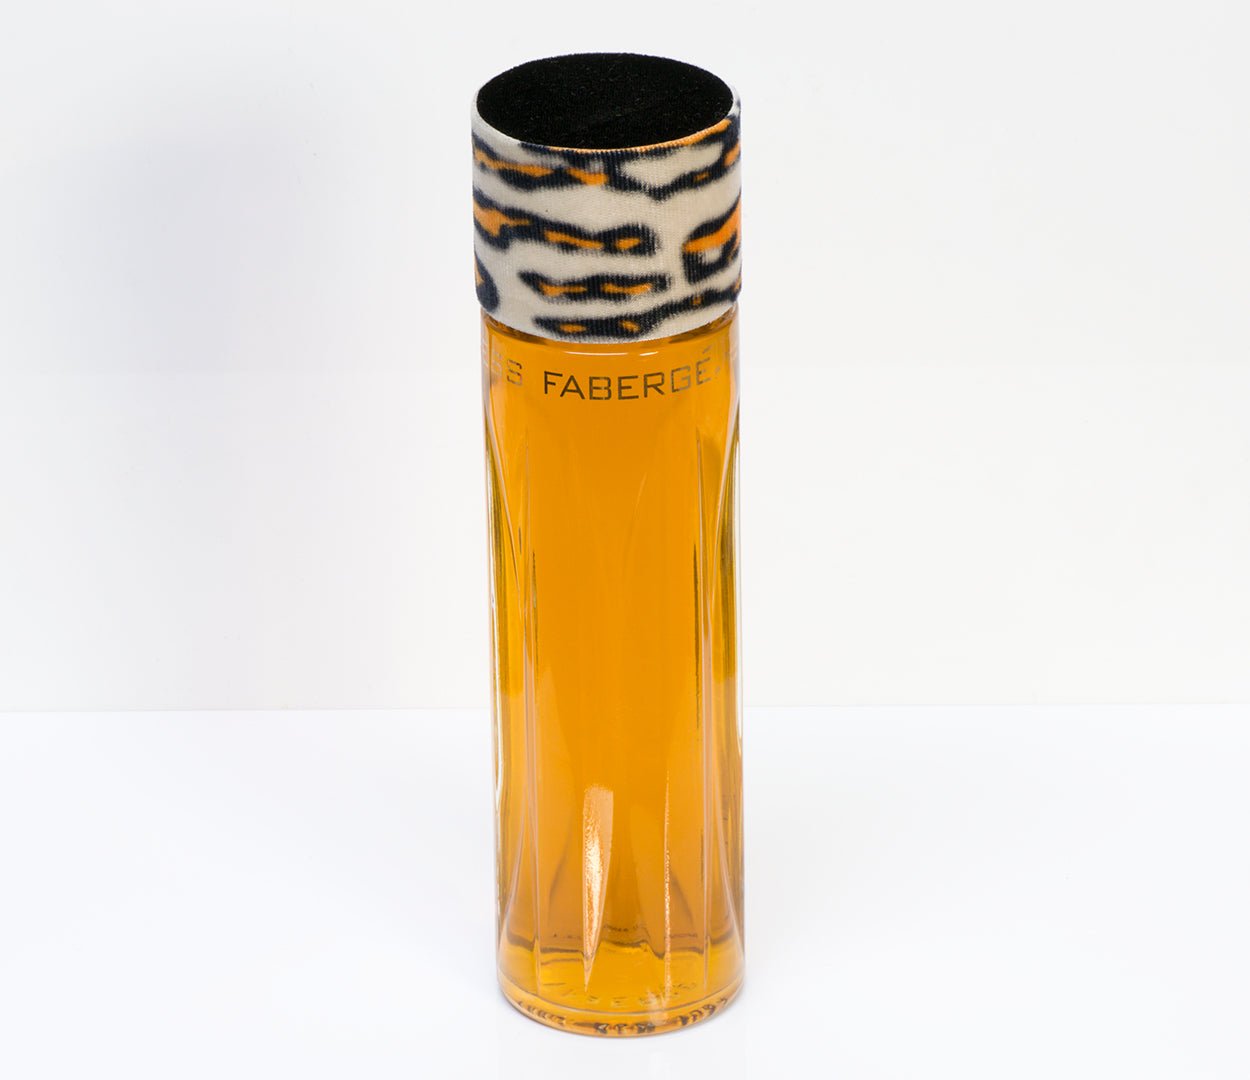 Faberge Tigress Cologne Perfume Bottle 12 oz.